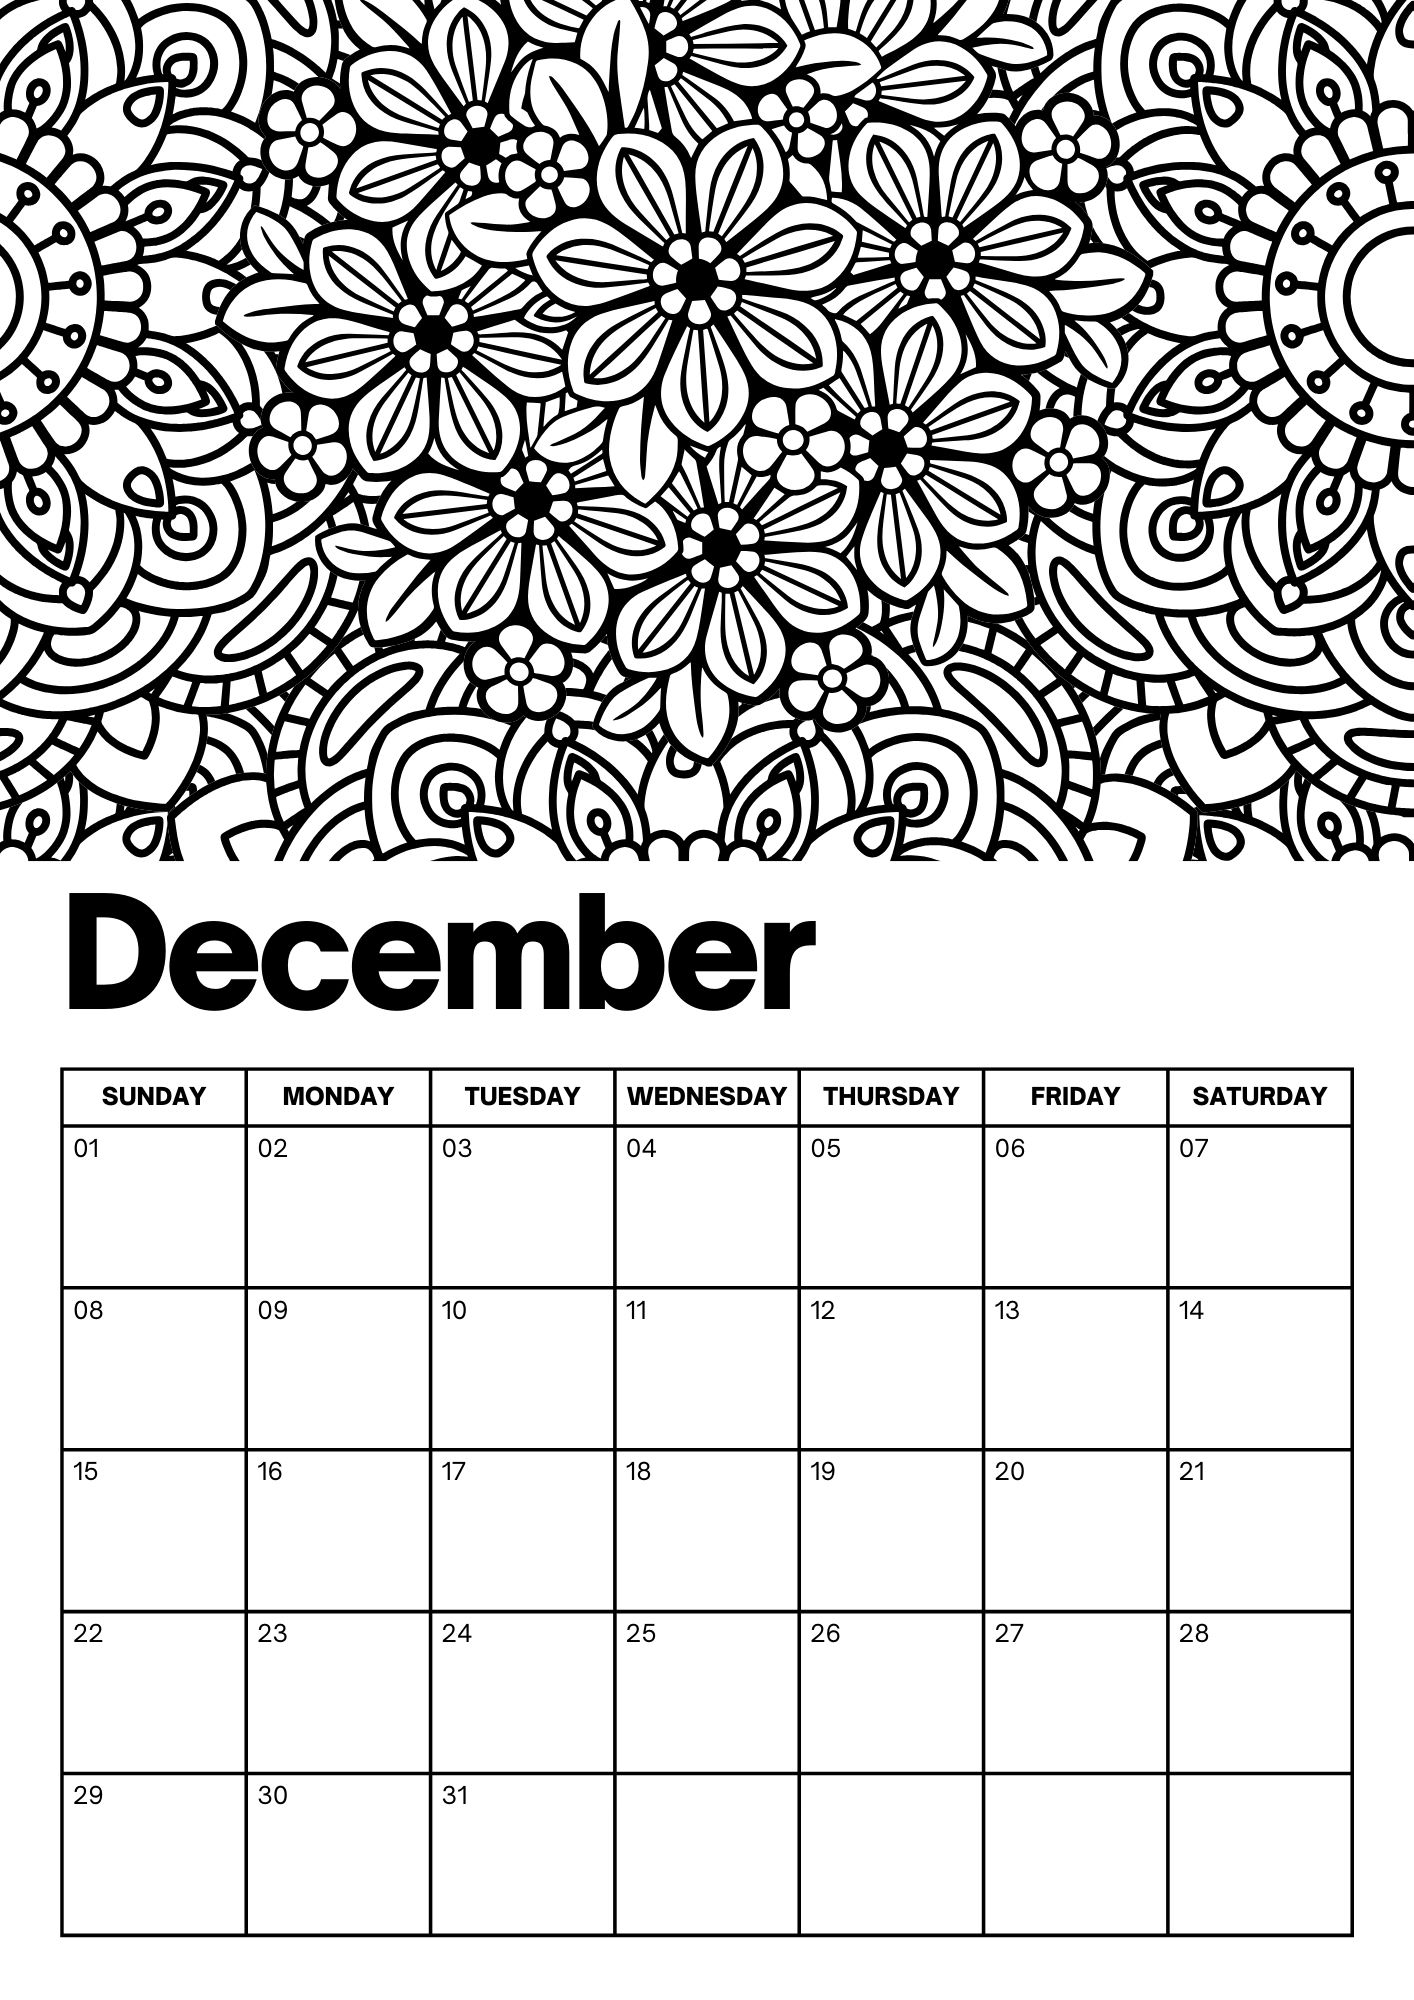 December Calendars - 100% FREE PRINTABLES